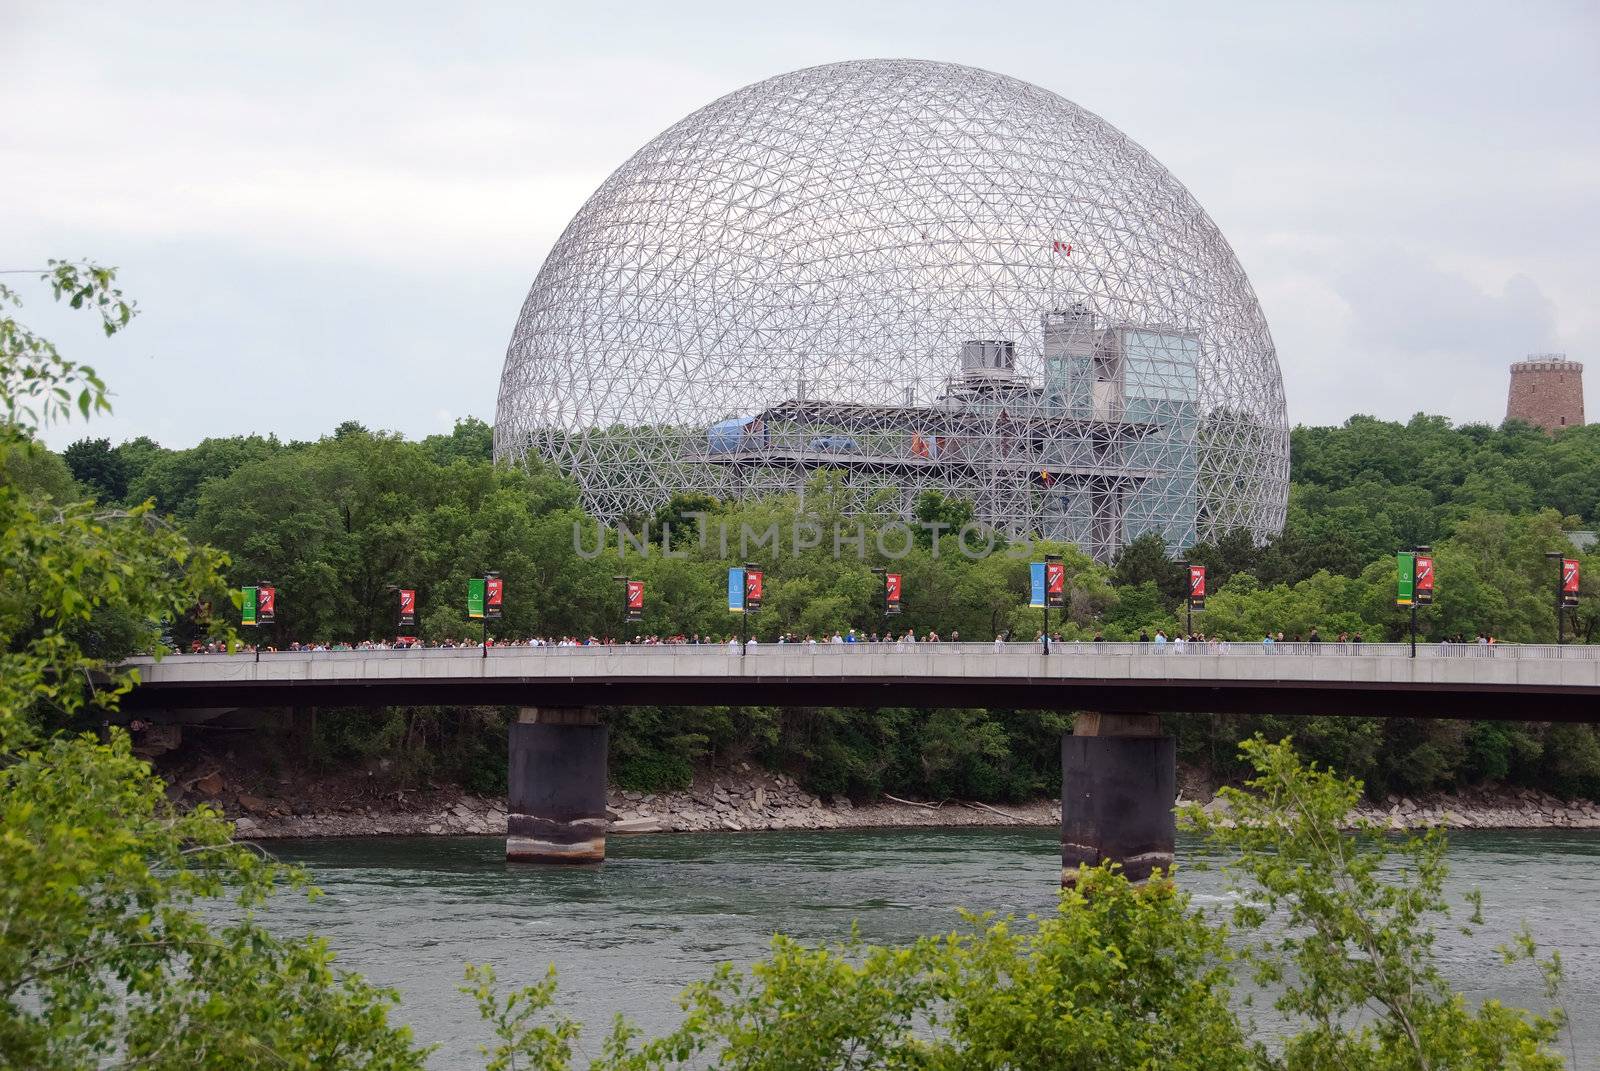 Image of the Biospere dome in Montreal